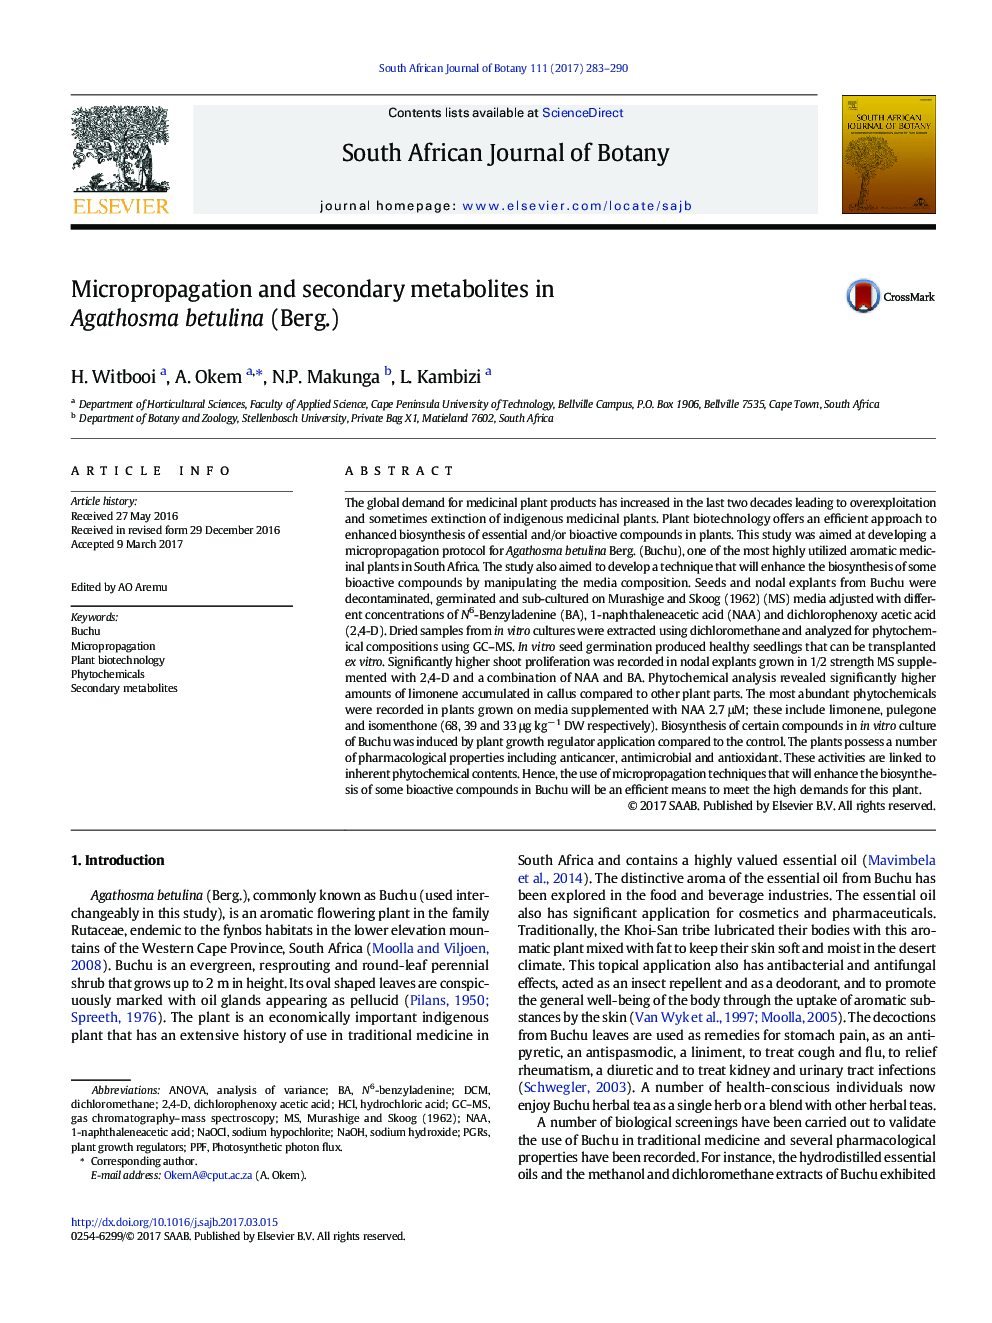 Micropropagation and secondary metabolites in Agathosma betulina (Berg.)